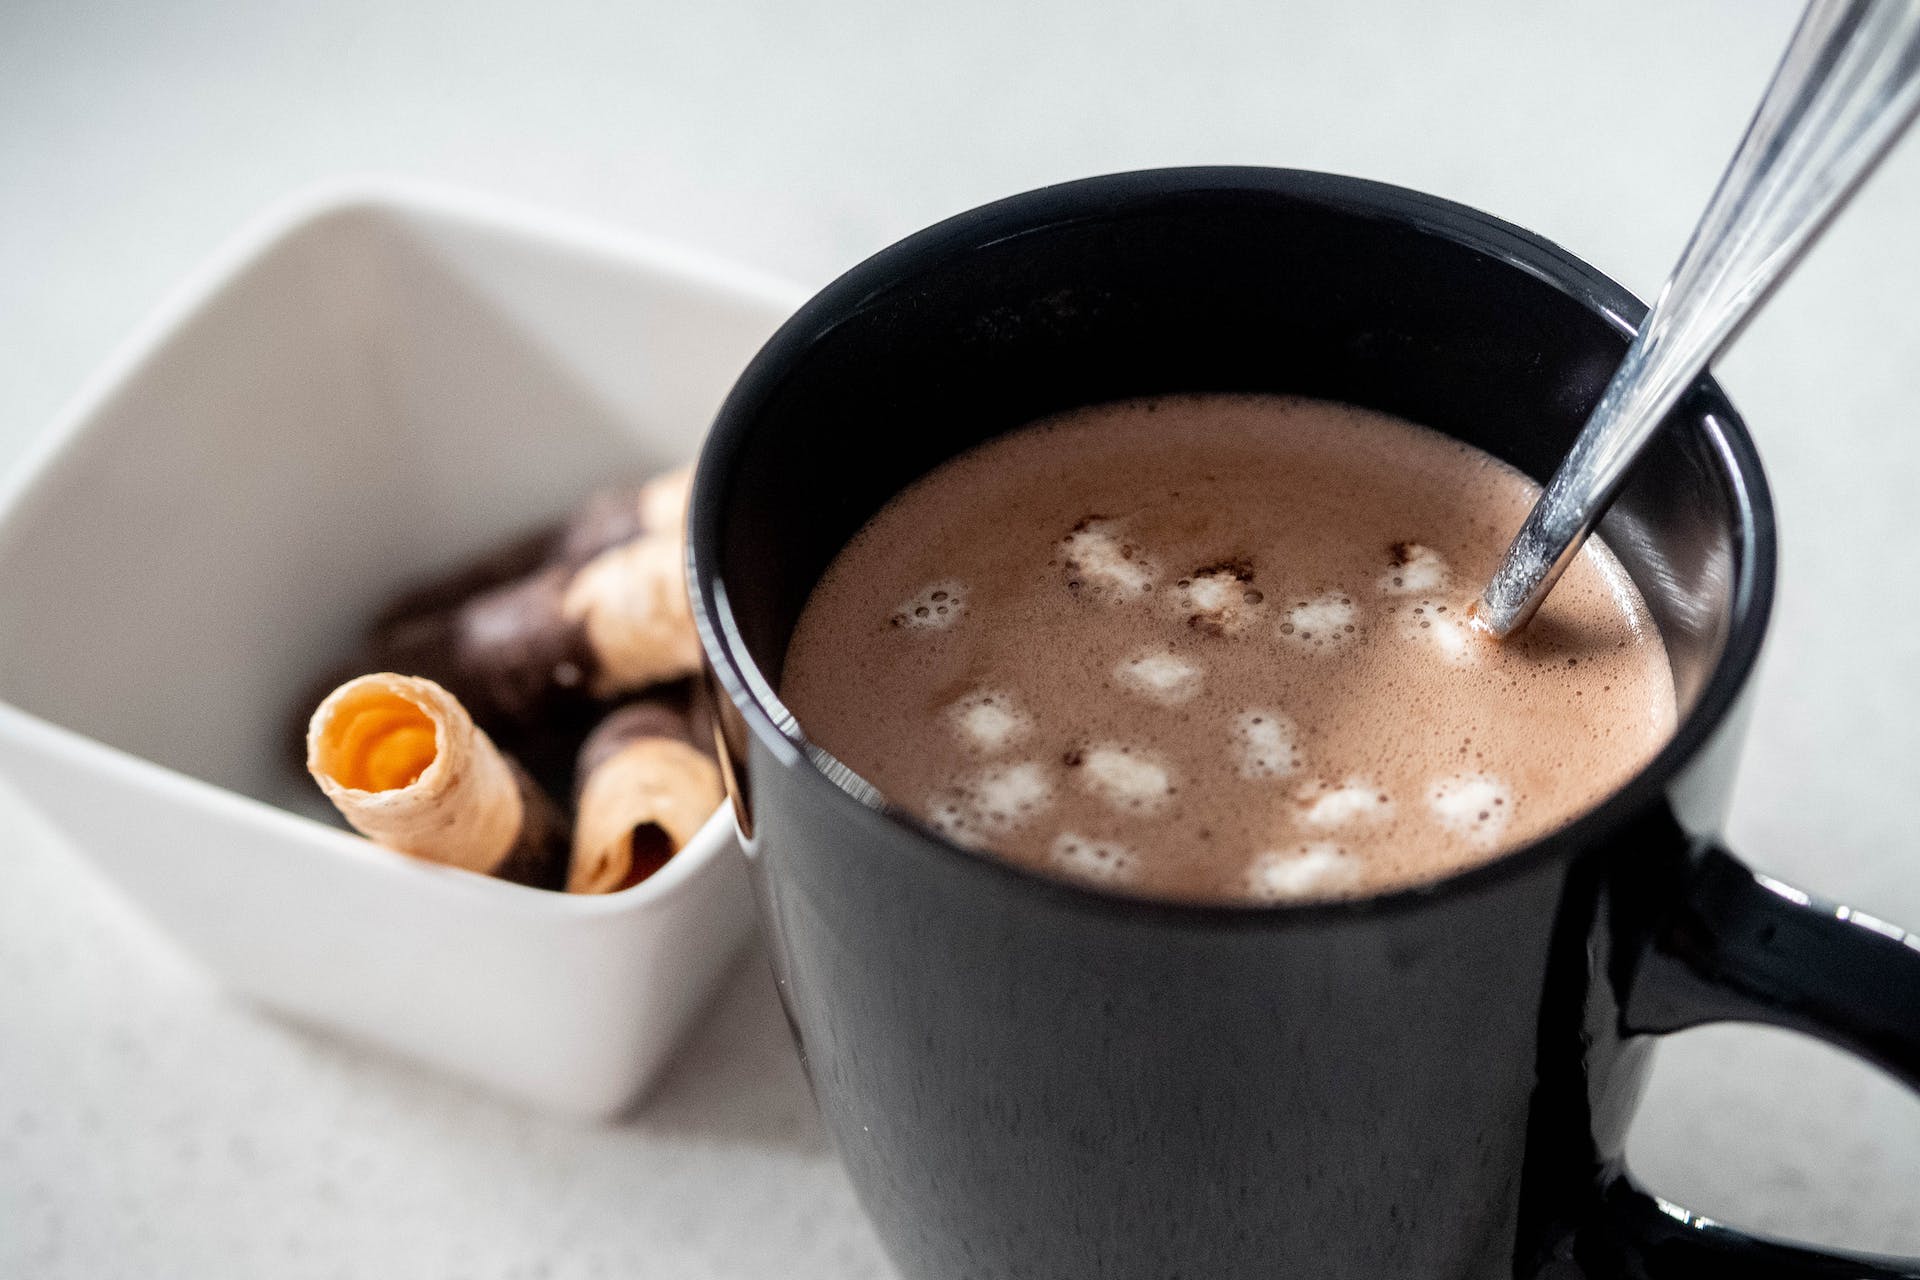 Hot chocolate in a black mug | Source: Pexels